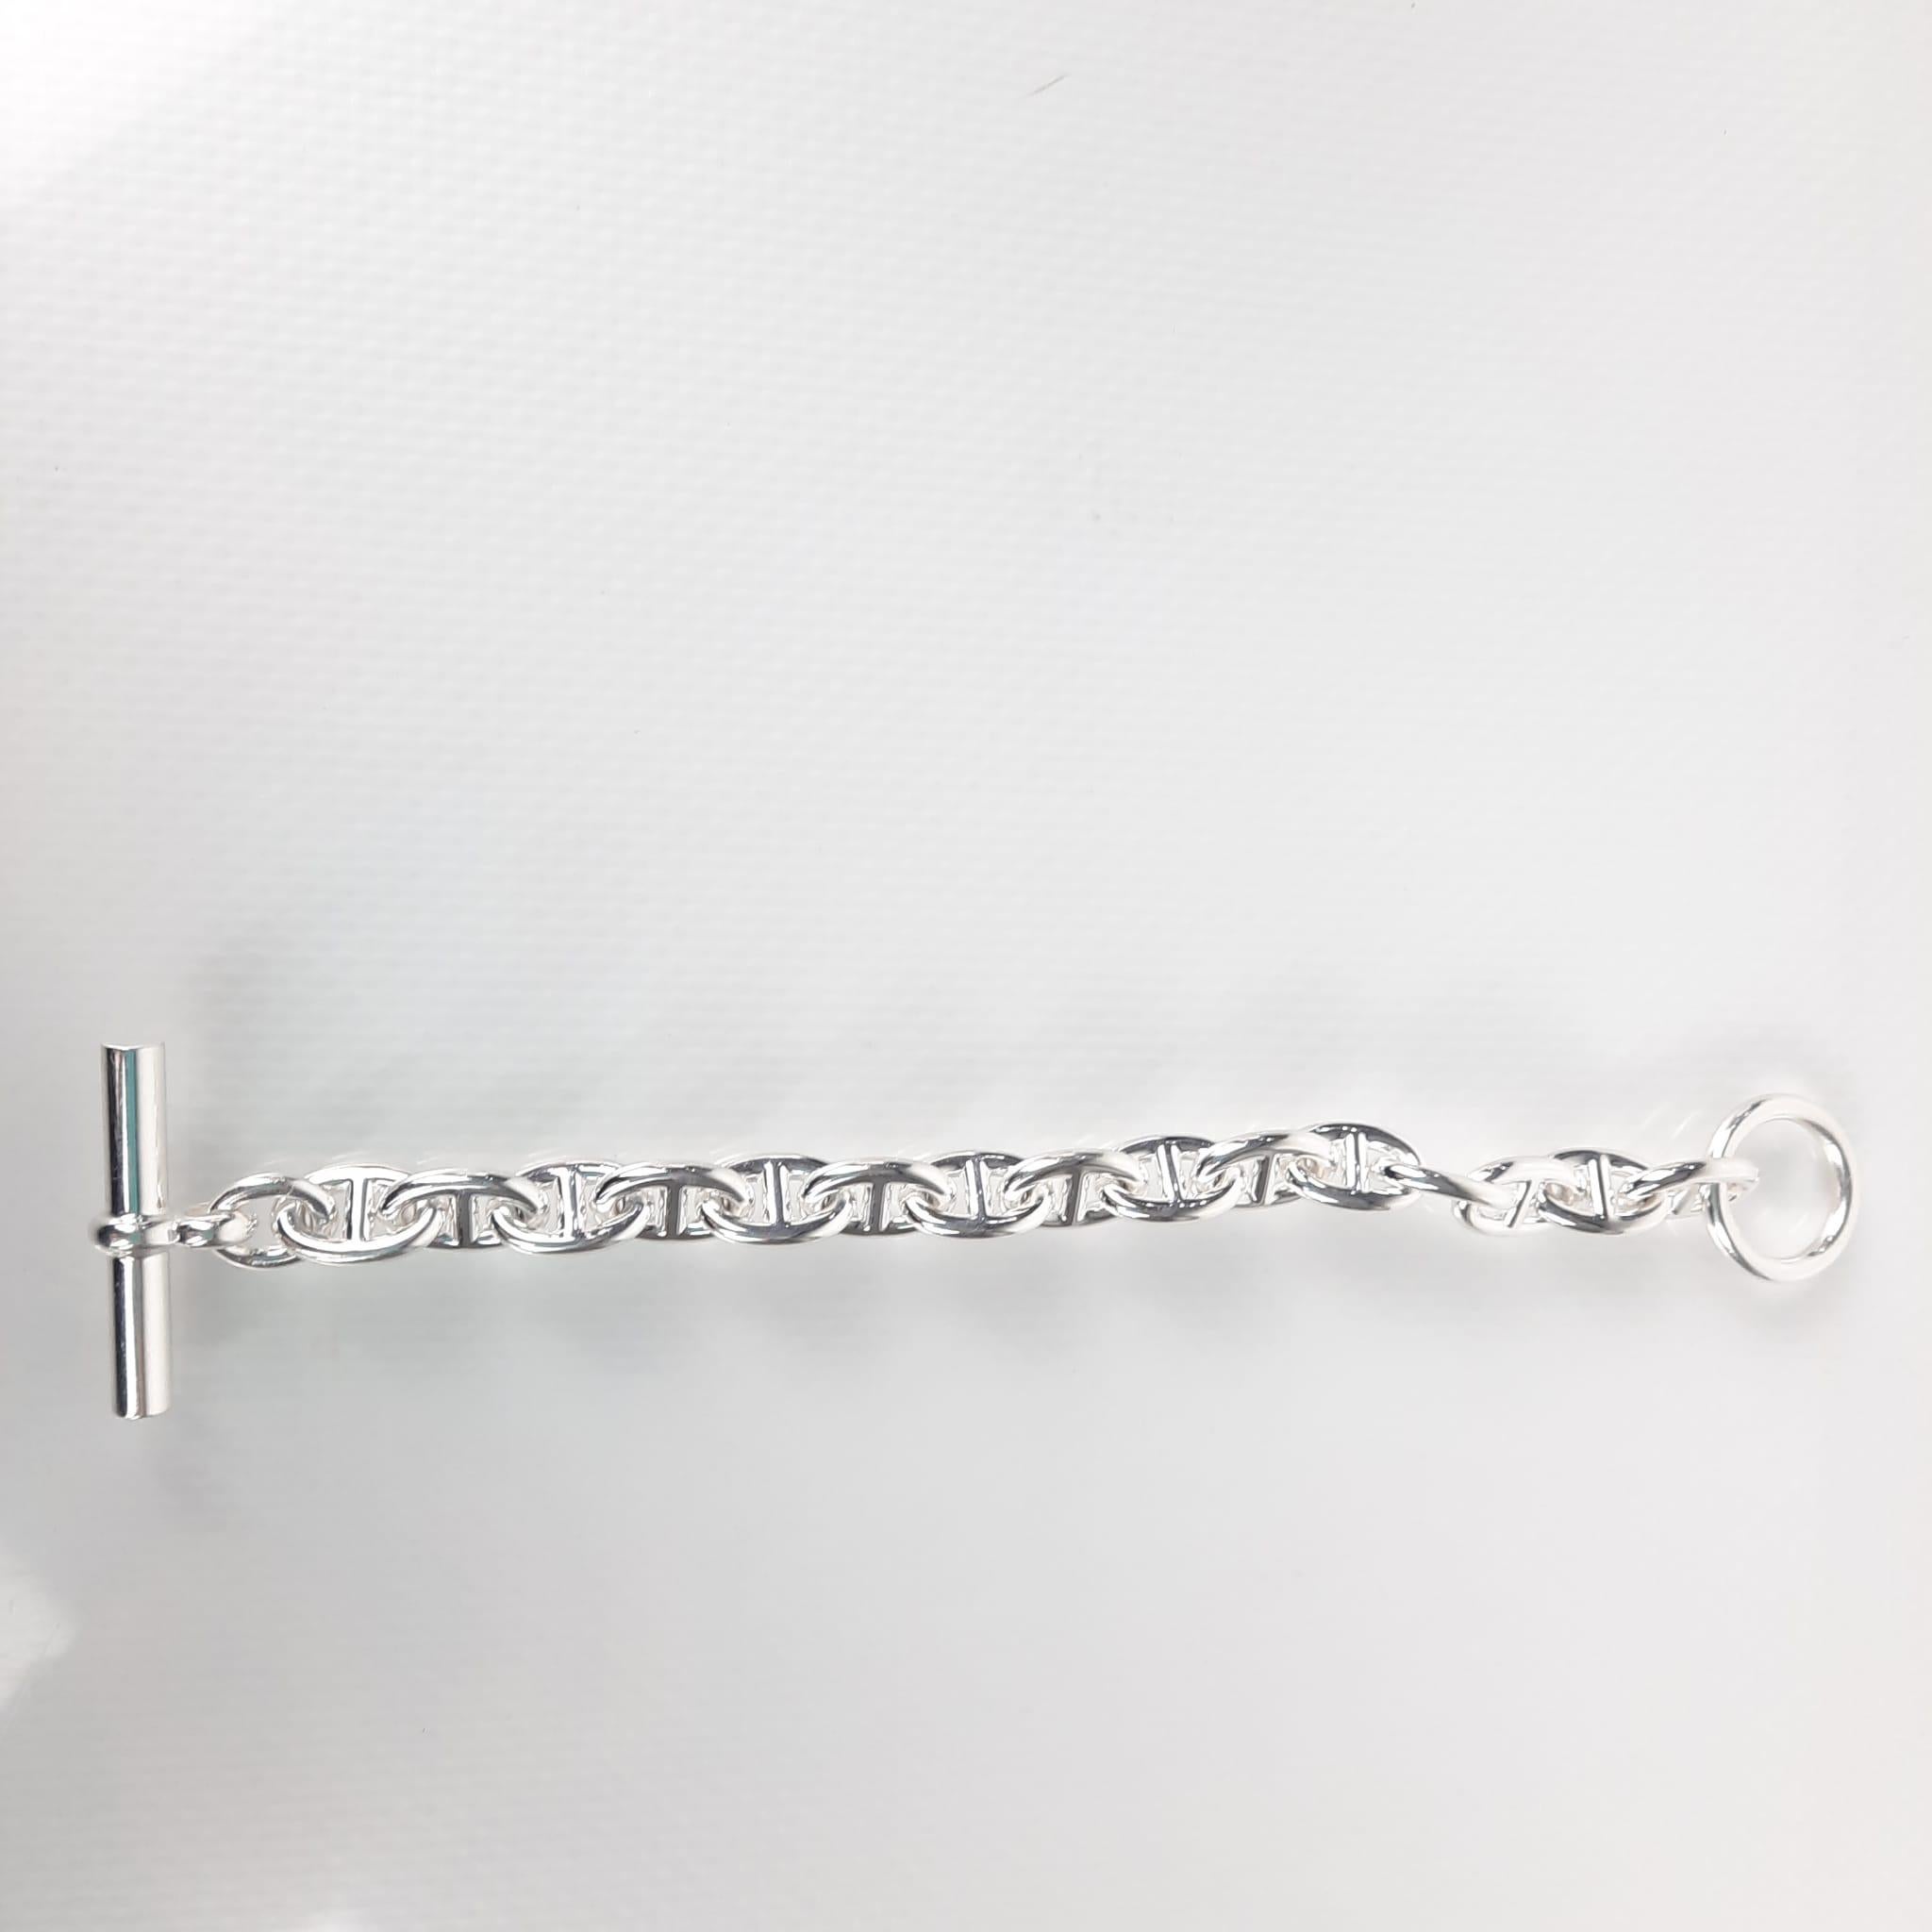 Hermes Chaine d'ancre bracelet, small model Size 15 1